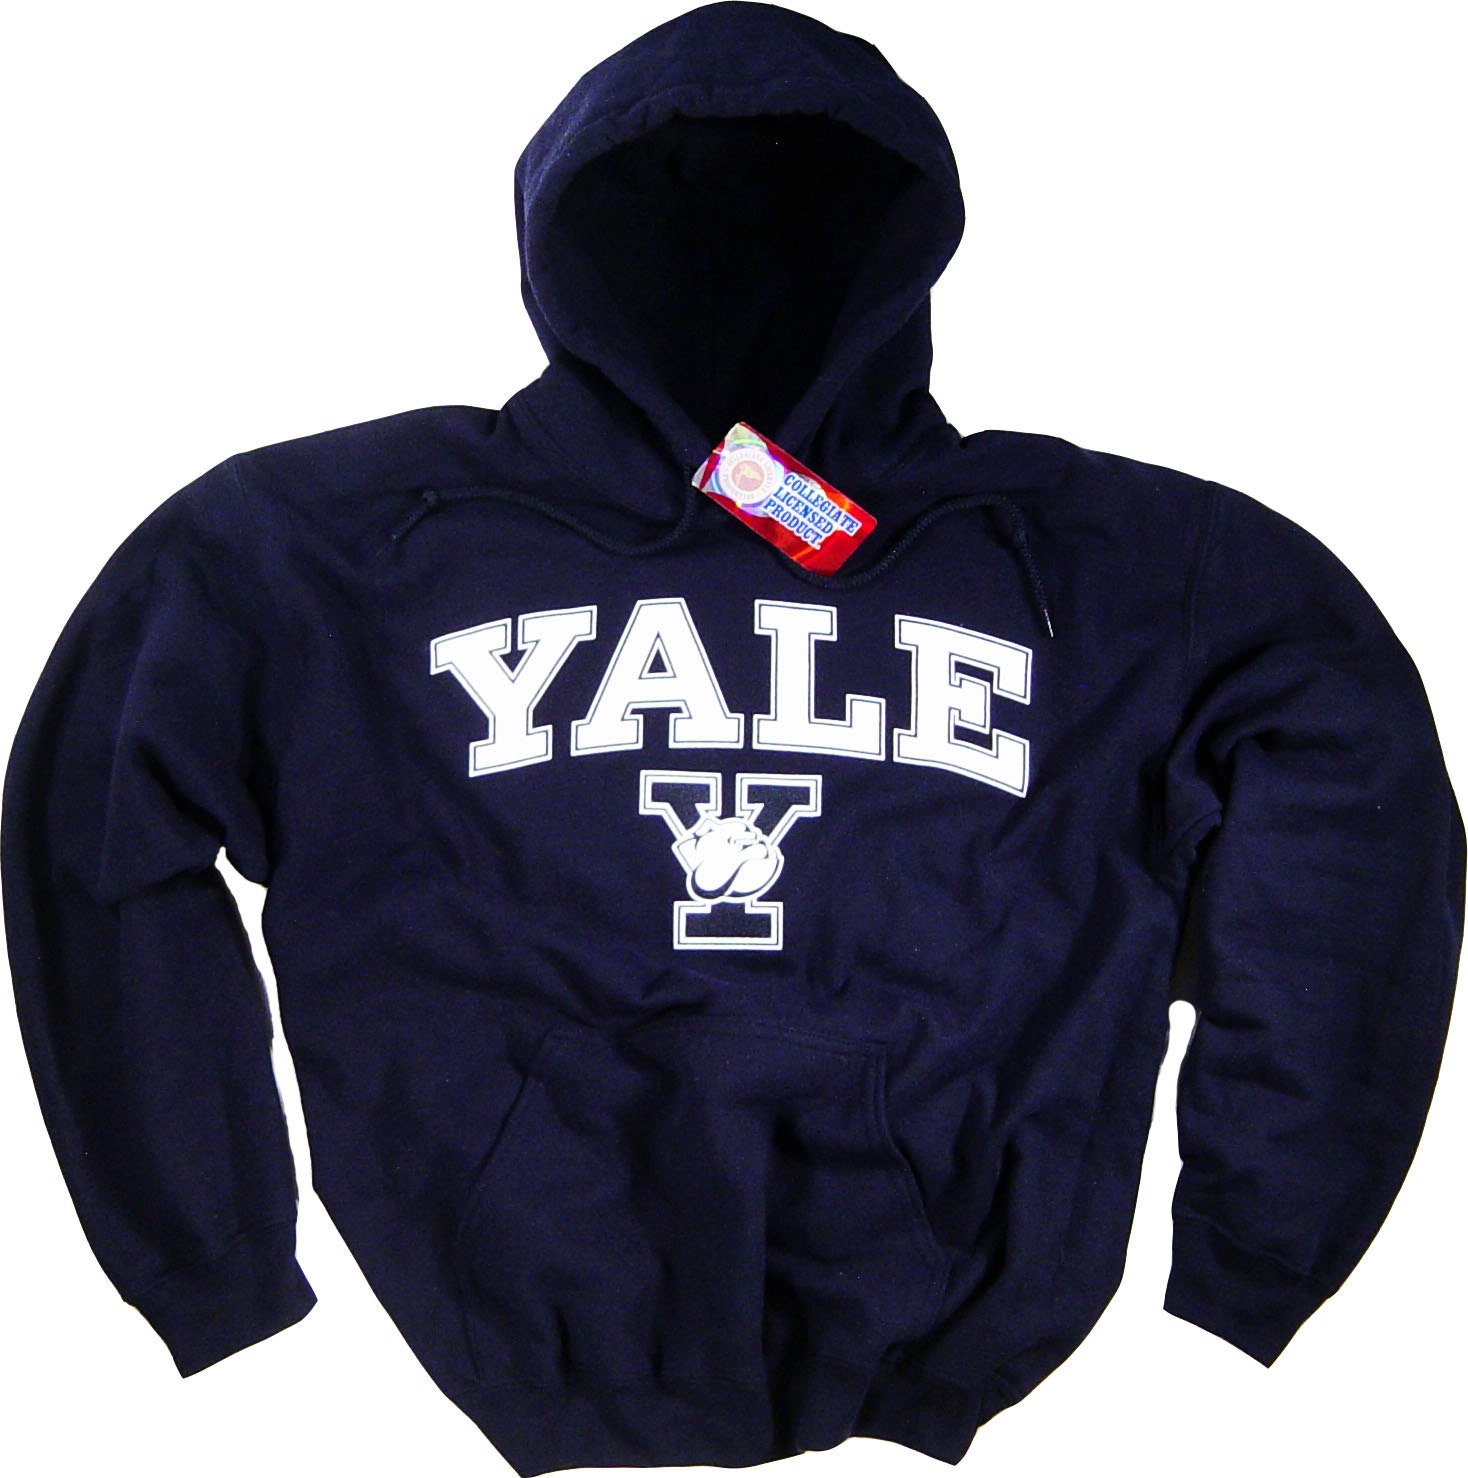 Yale Hoodie Sweat Shirt Bulldogs College University Apparel